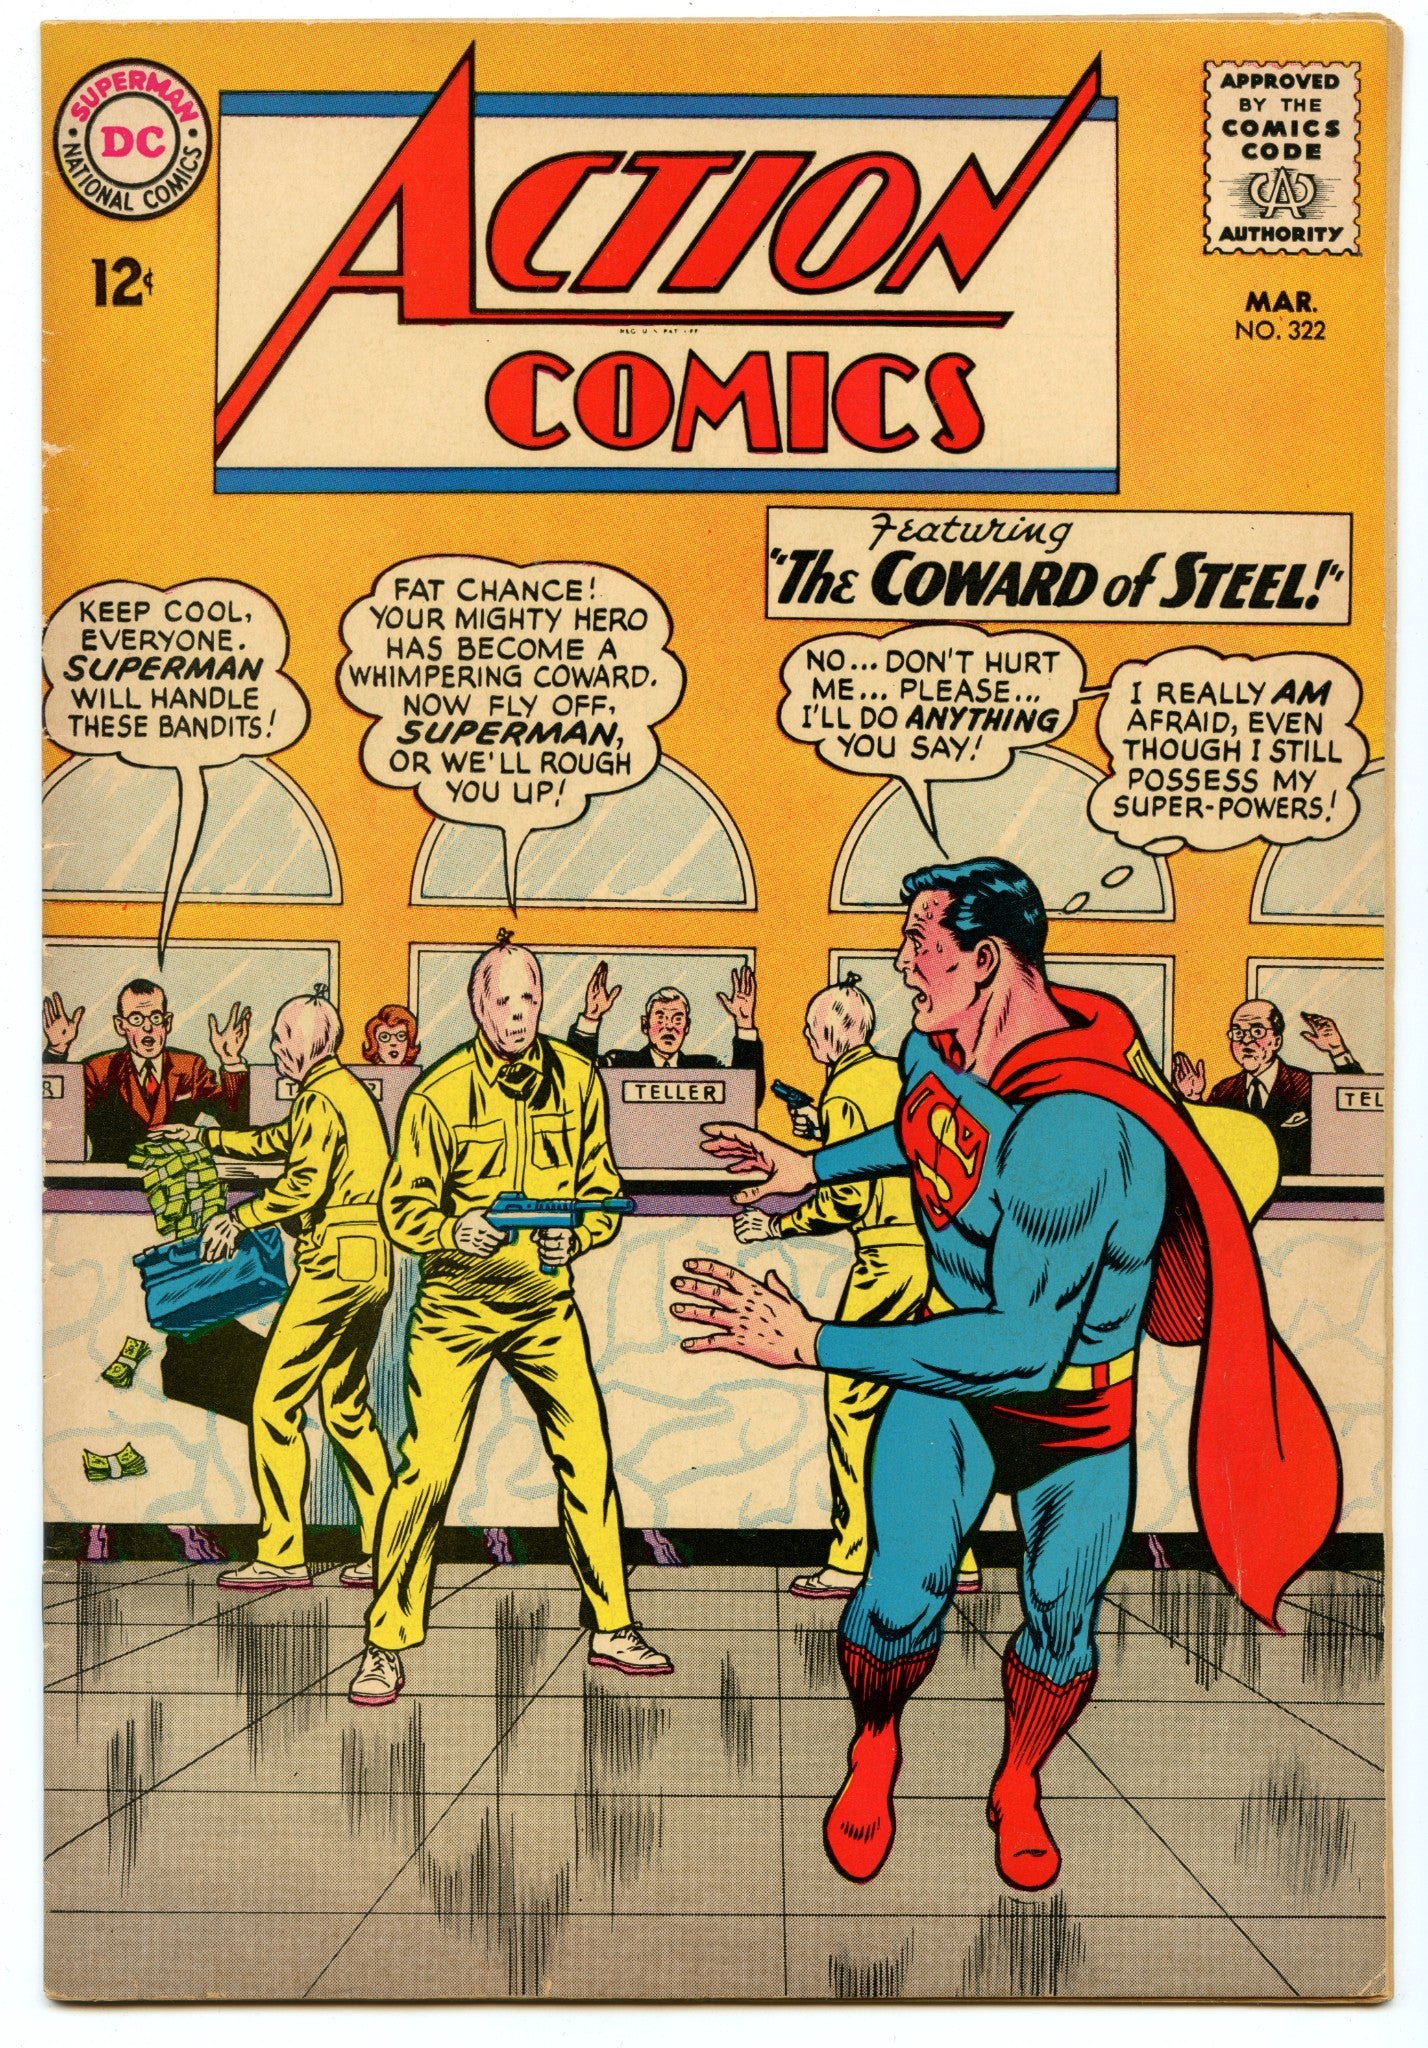 Action Comics 322 (Mar 1965) FI/VF (7.0)